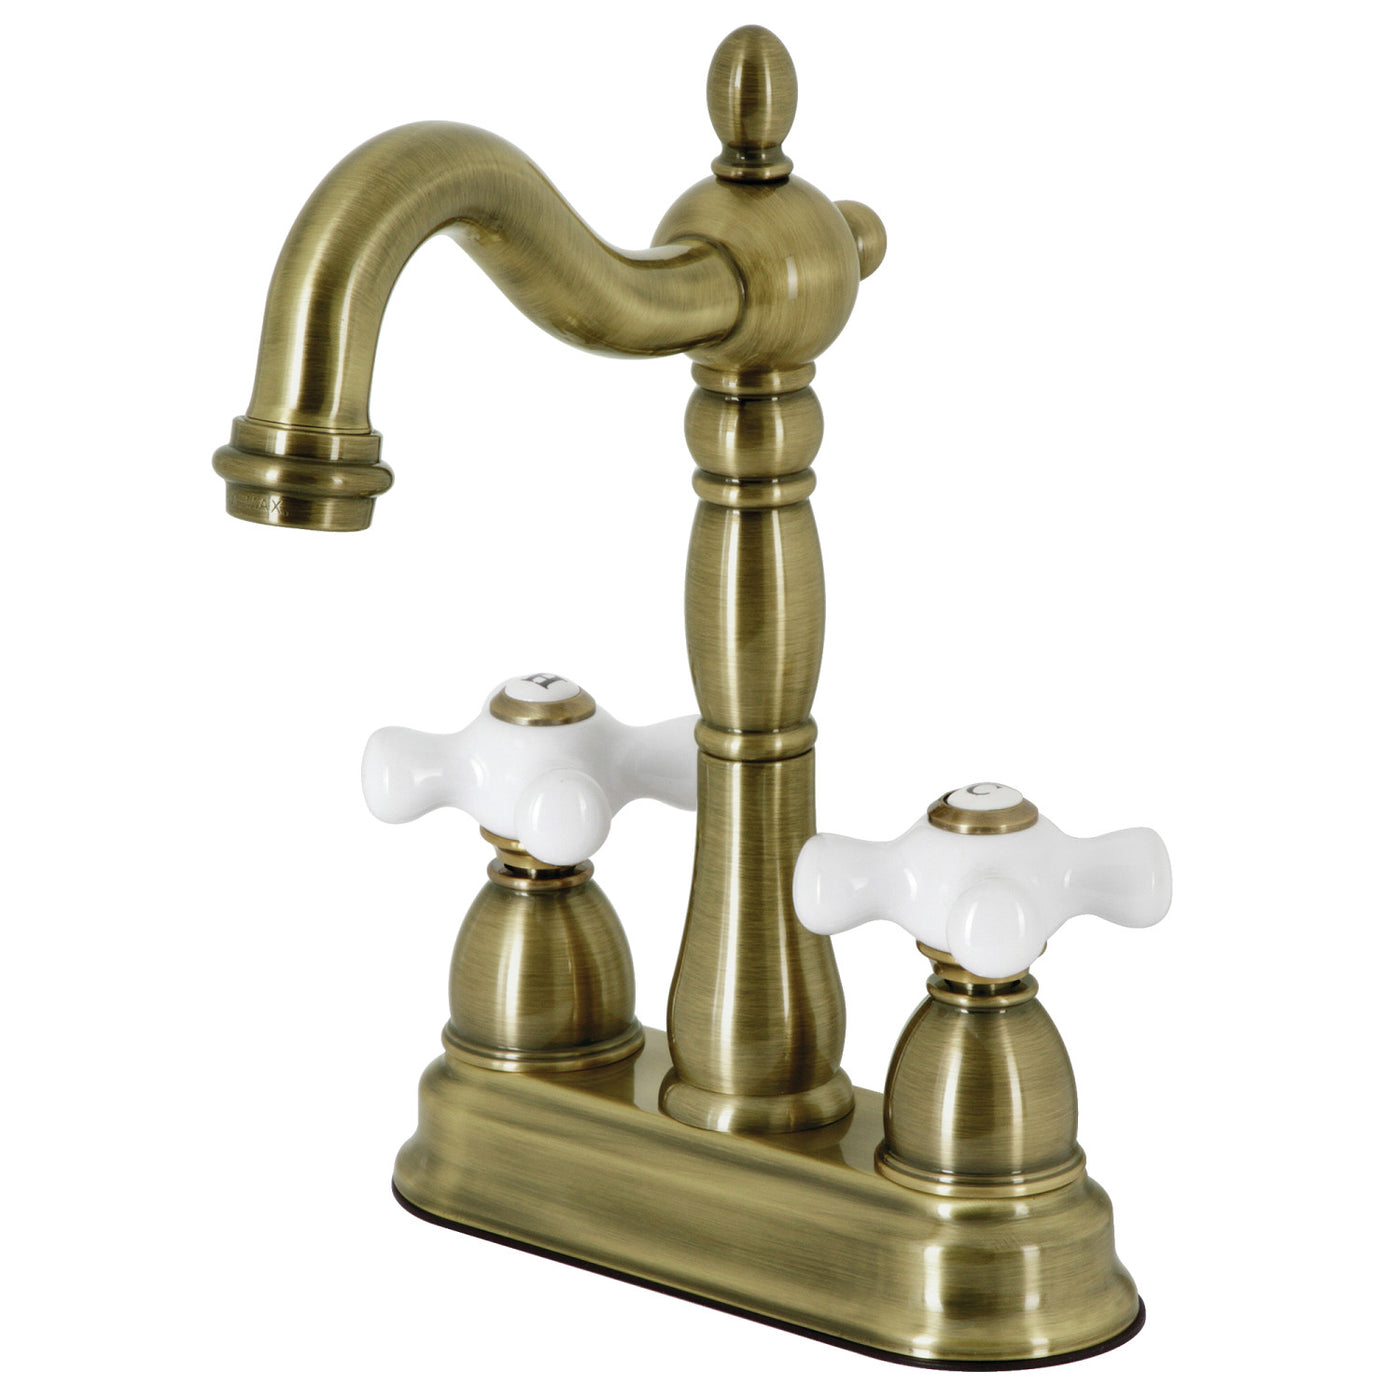 Elements of Design EB1493PX 4-Inch Centerset Bar Faucet, Antique Brass